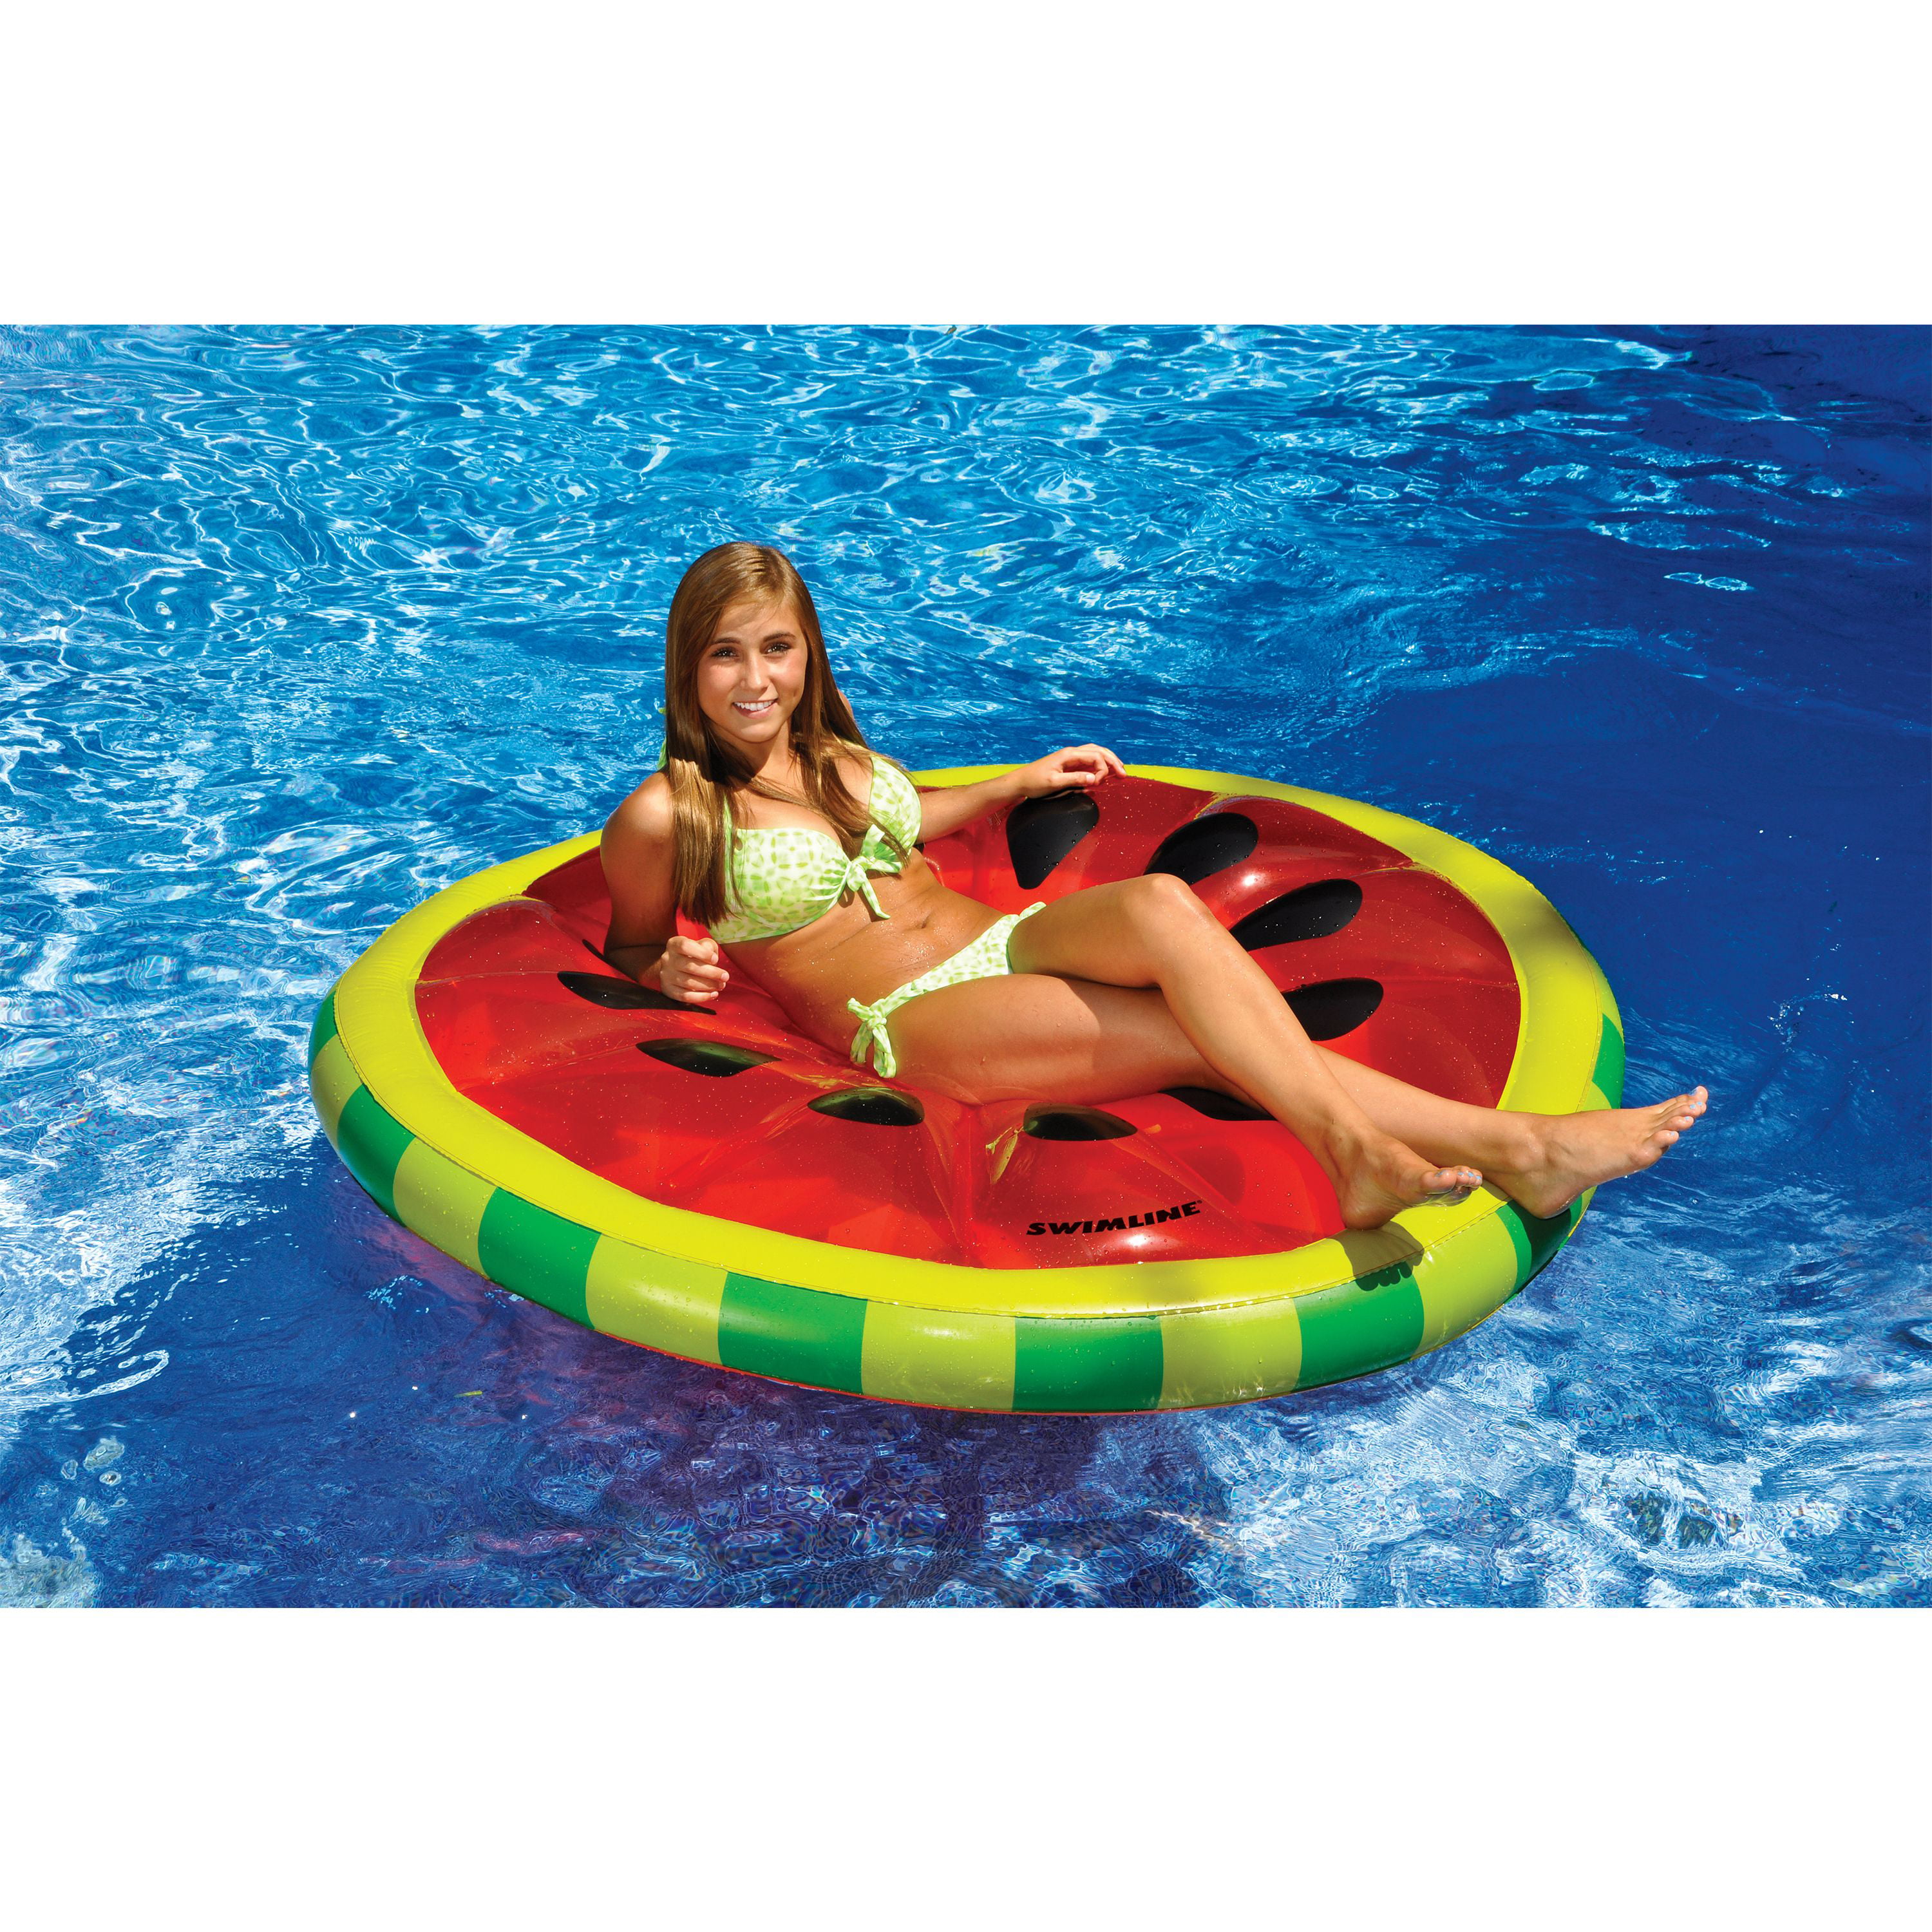 Swimline Giant Inflatable 72" Sunflower Island Swimming Pool Raft Float 90543 